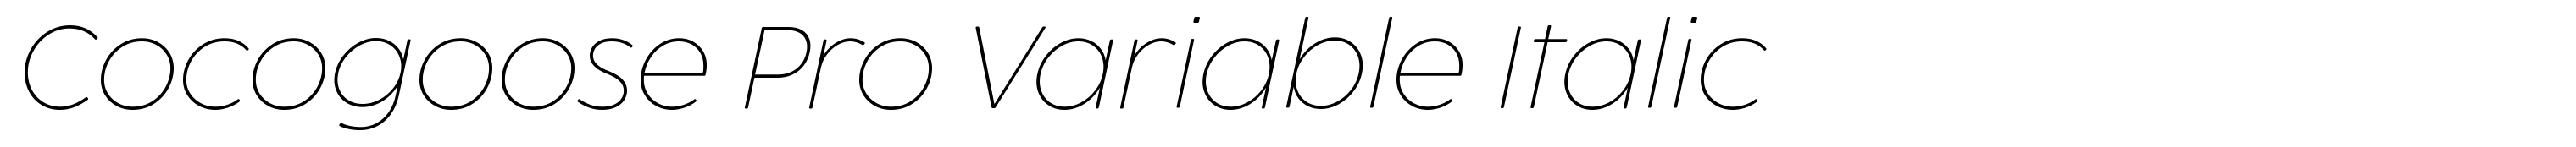 Cocogoose Pro Variable Italic